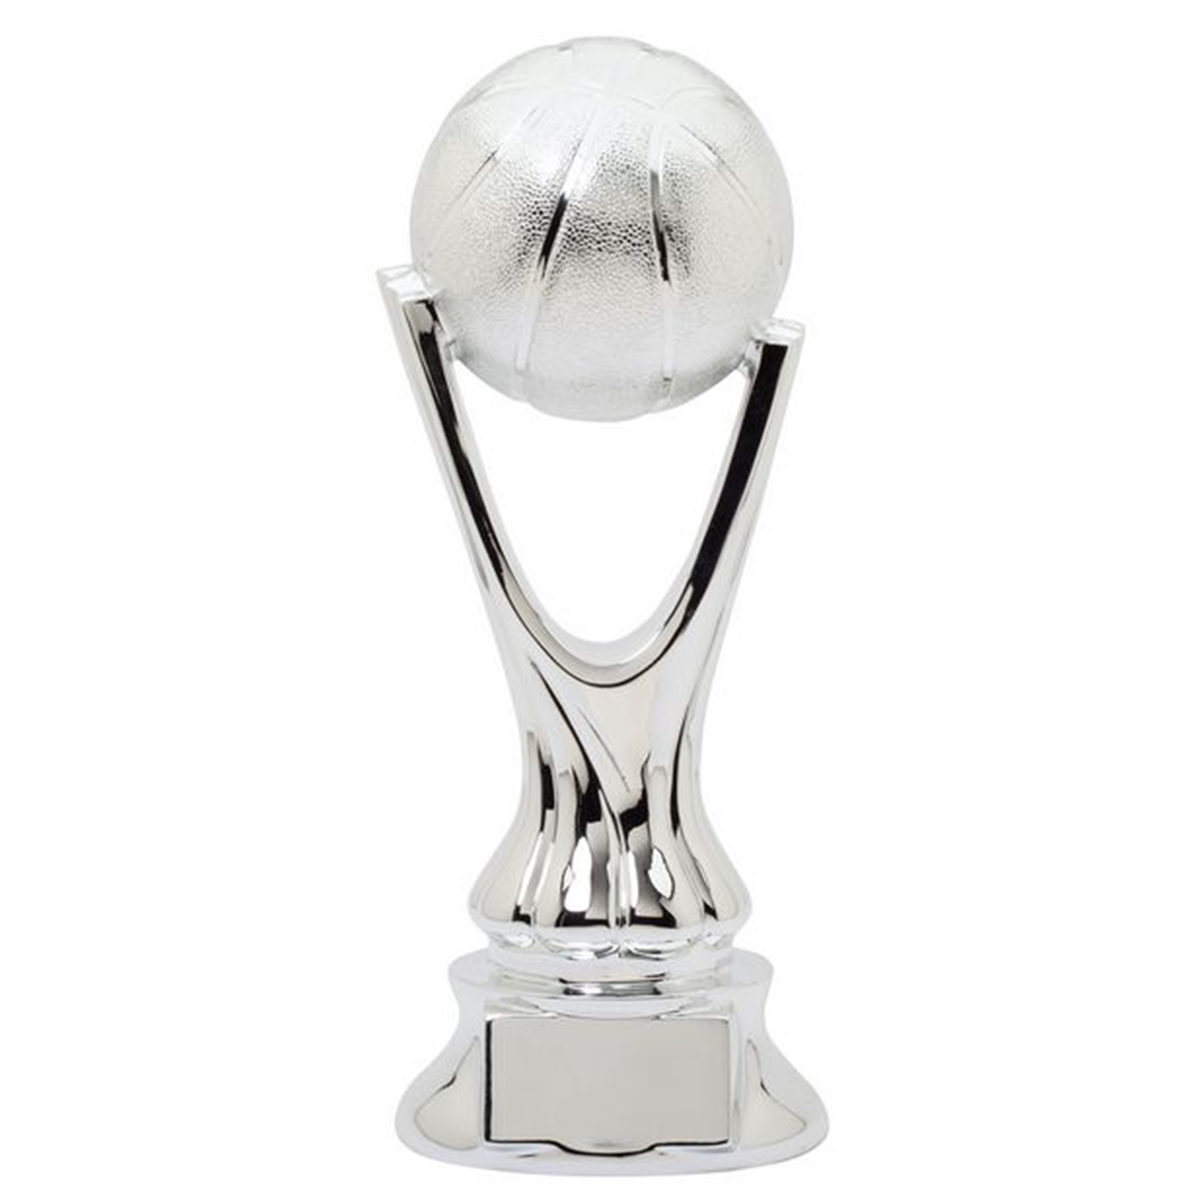 Metalized Plated Basketball Resin Award